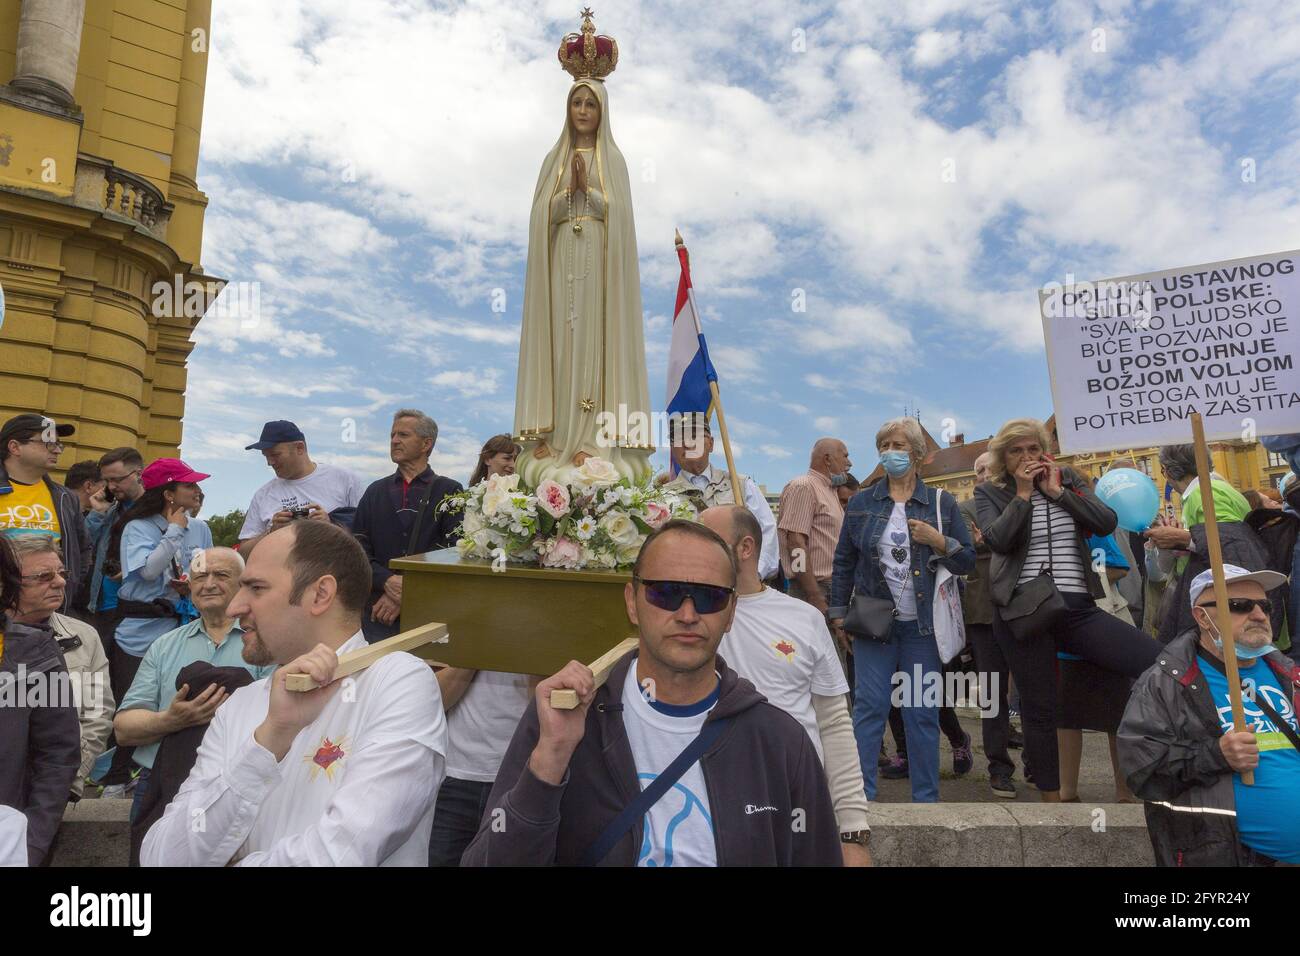 Catholic organisation Vigilare demonstration in Croatia Stock Photo